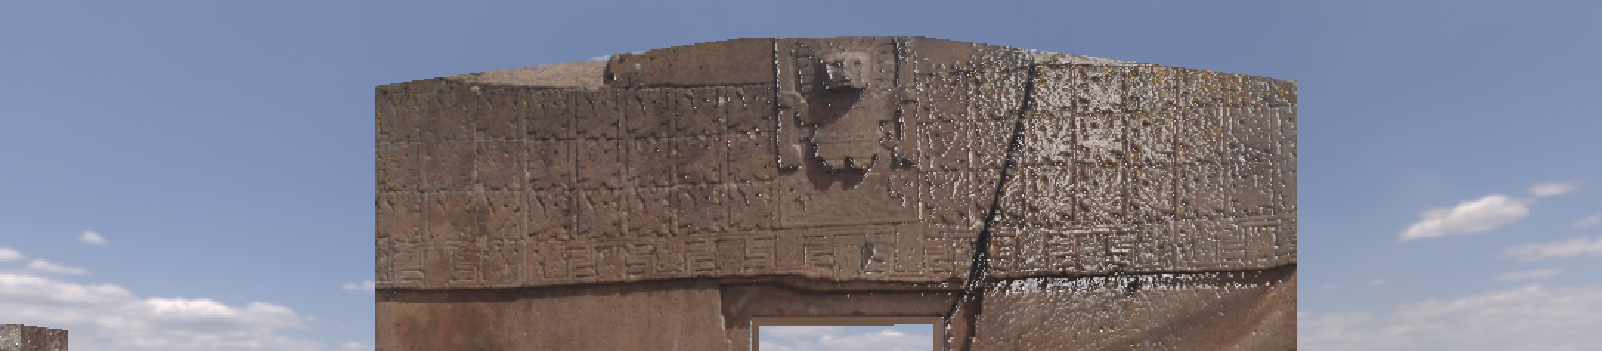 Recorrido virtual Tiwanaku Bolivia